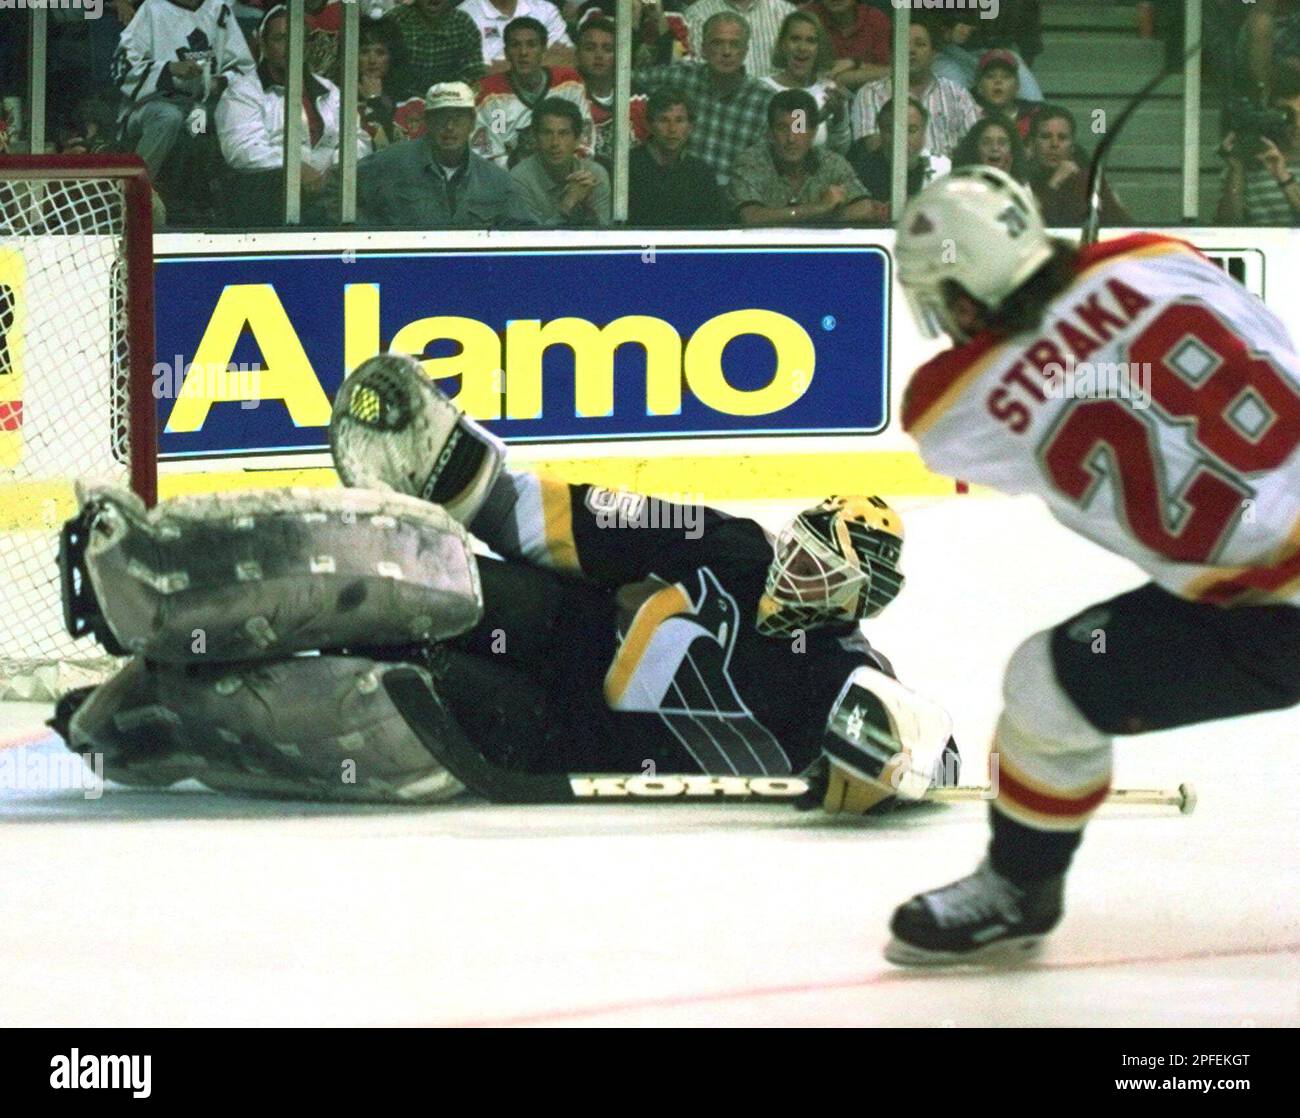 1996 NHL EASTERN CONFERENCE FINALS SOUVENIR PUCK PENGUINS VS PANTHERS